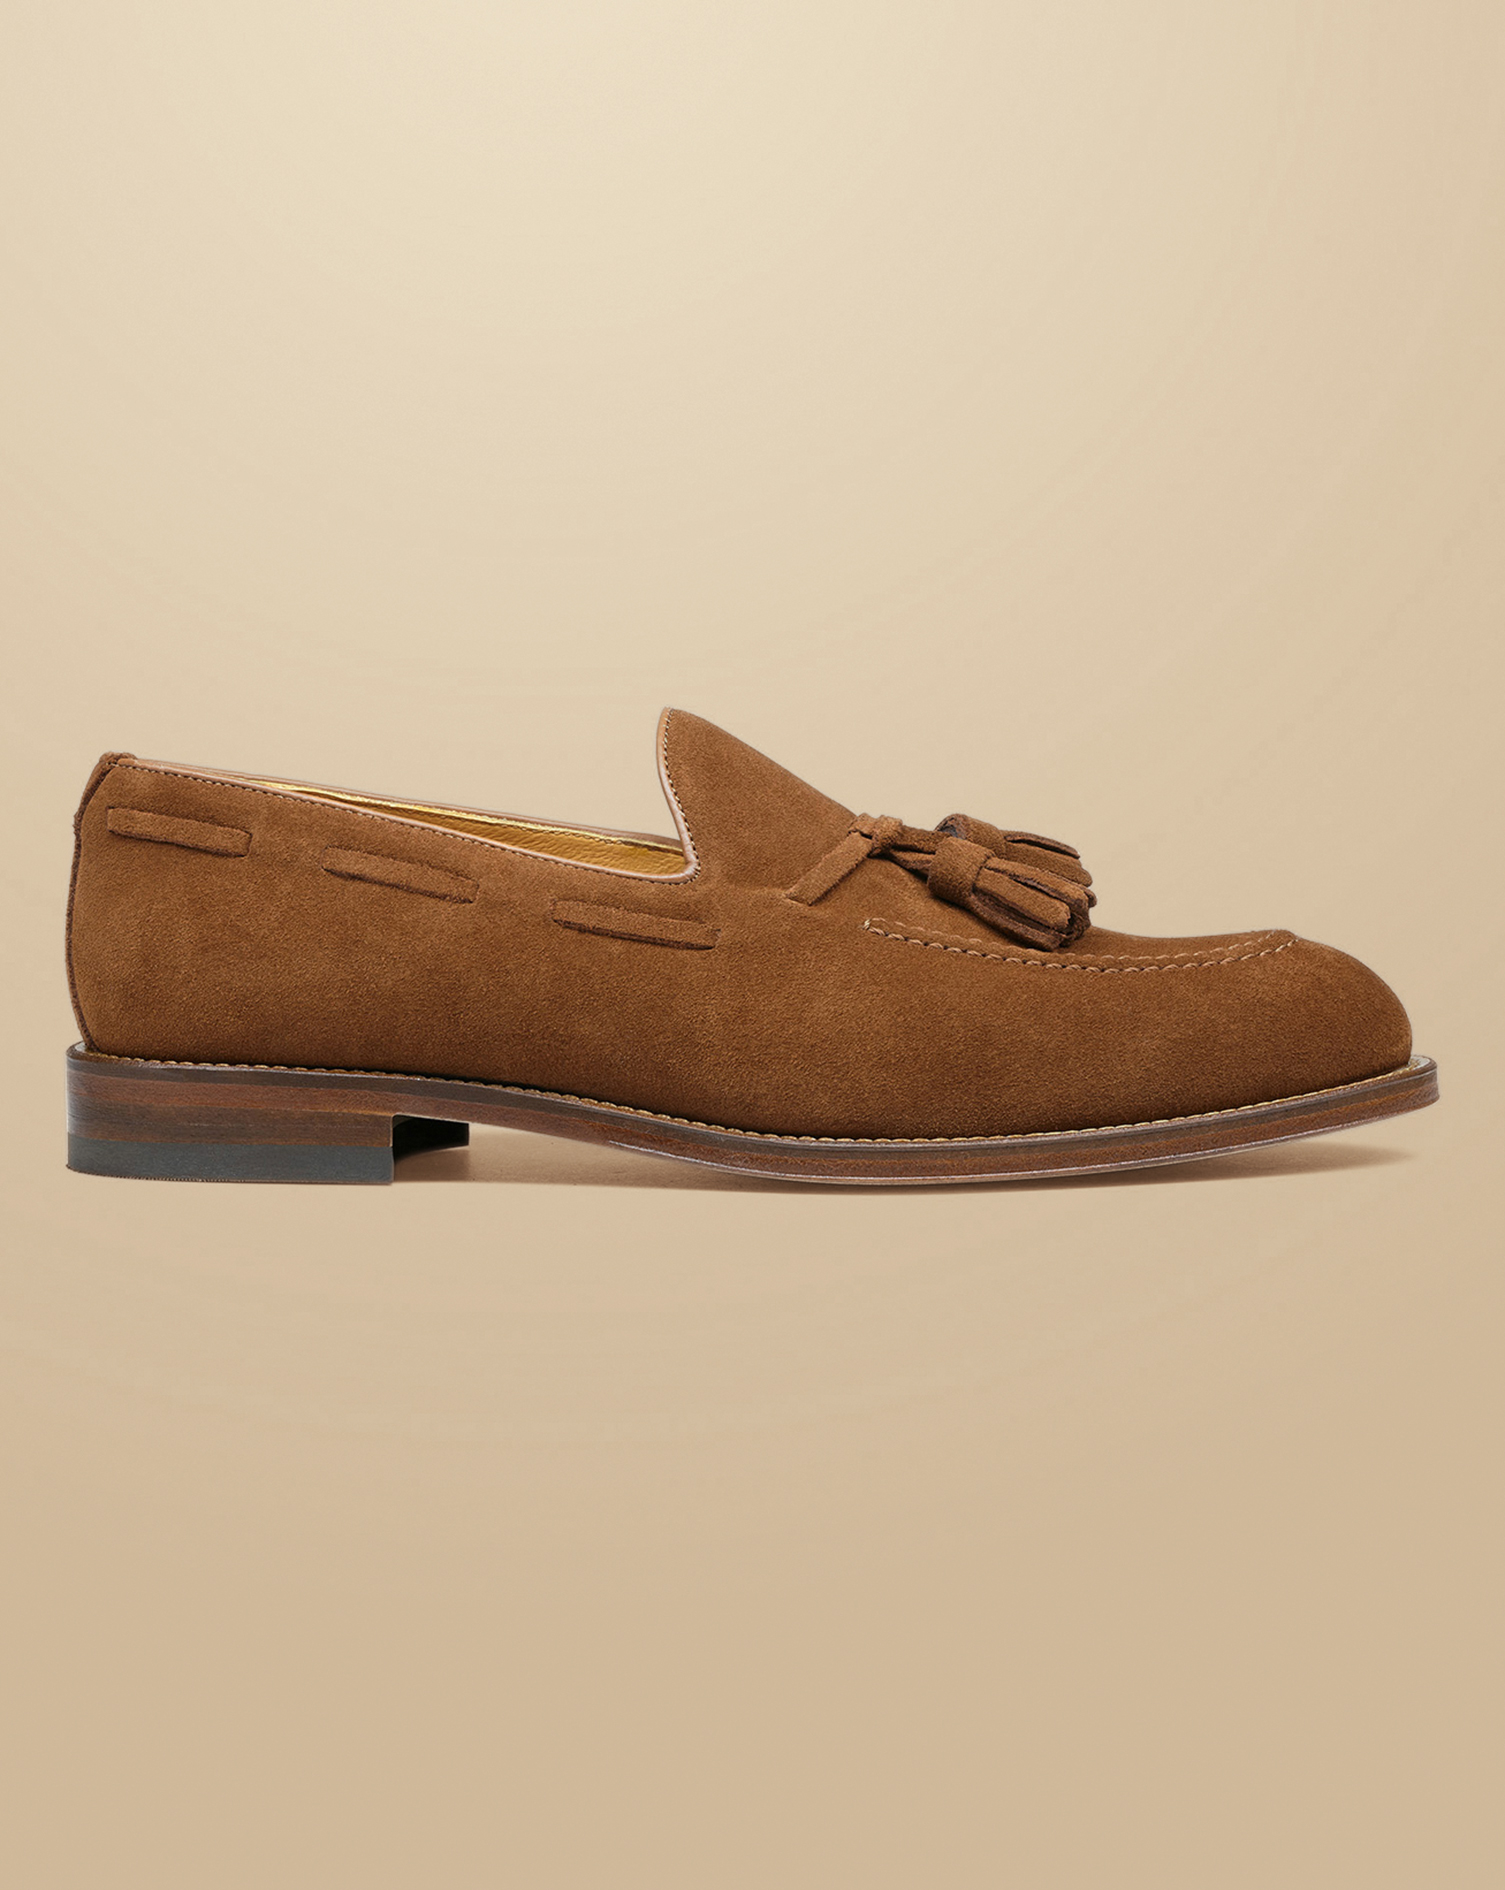 Men's Charles Tyrwhitt Tassel Loafers - Chestnut Brown Size 10 Suede
